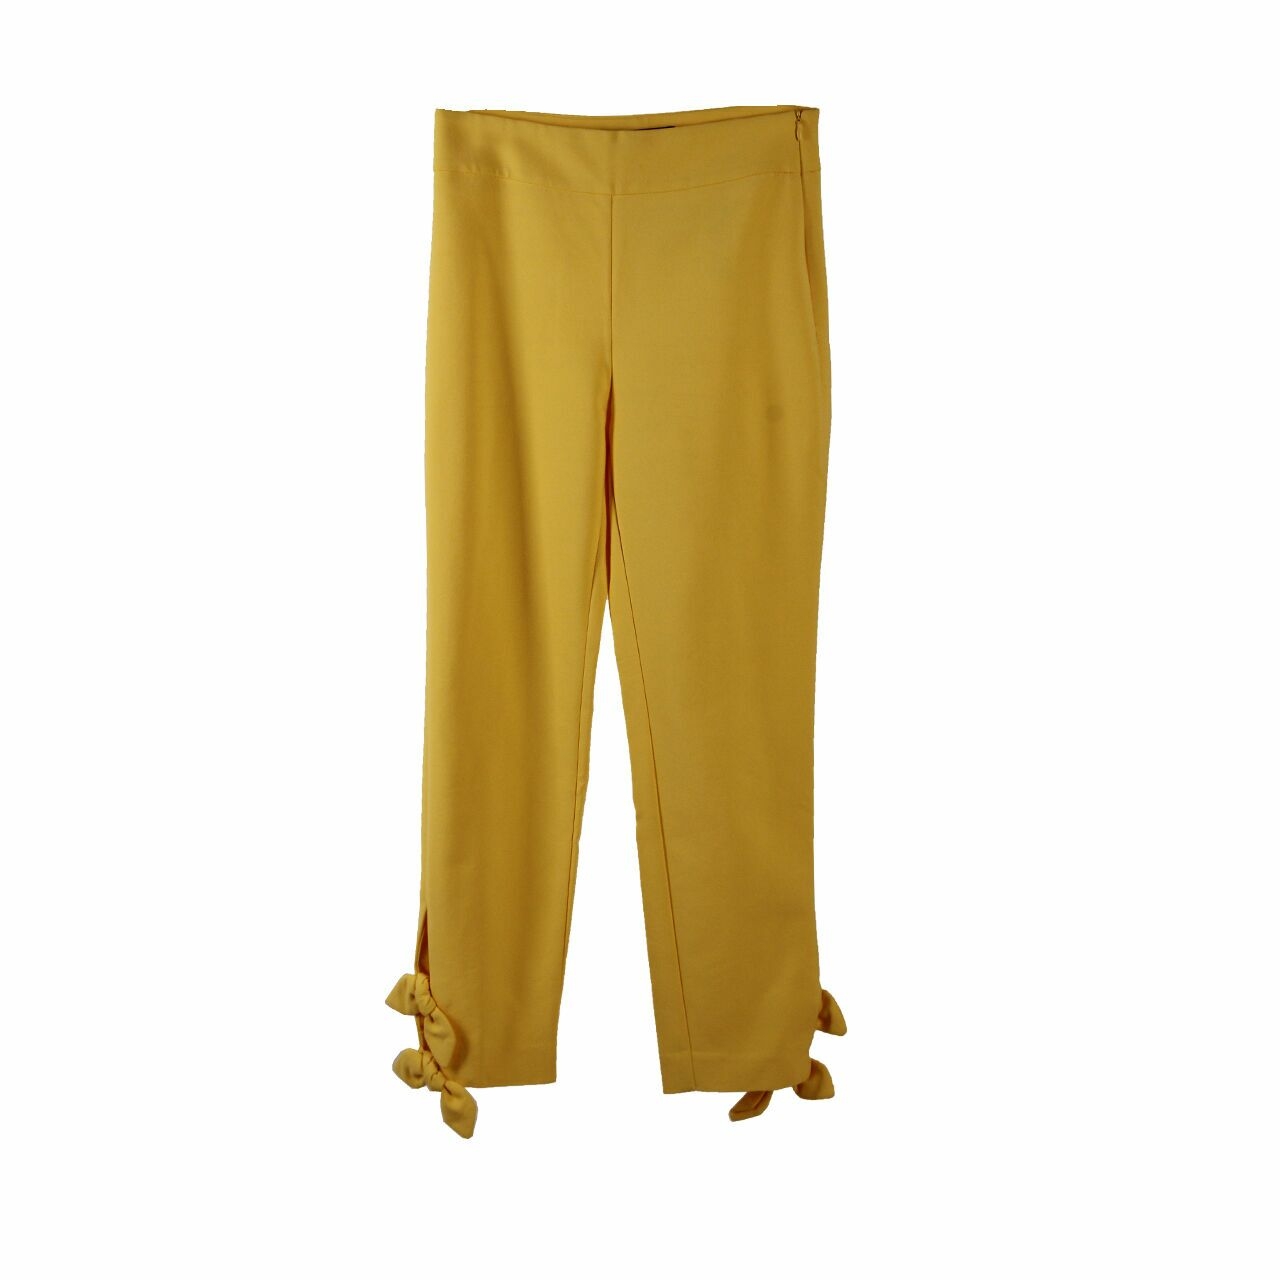 Zara Yellow Long Pants